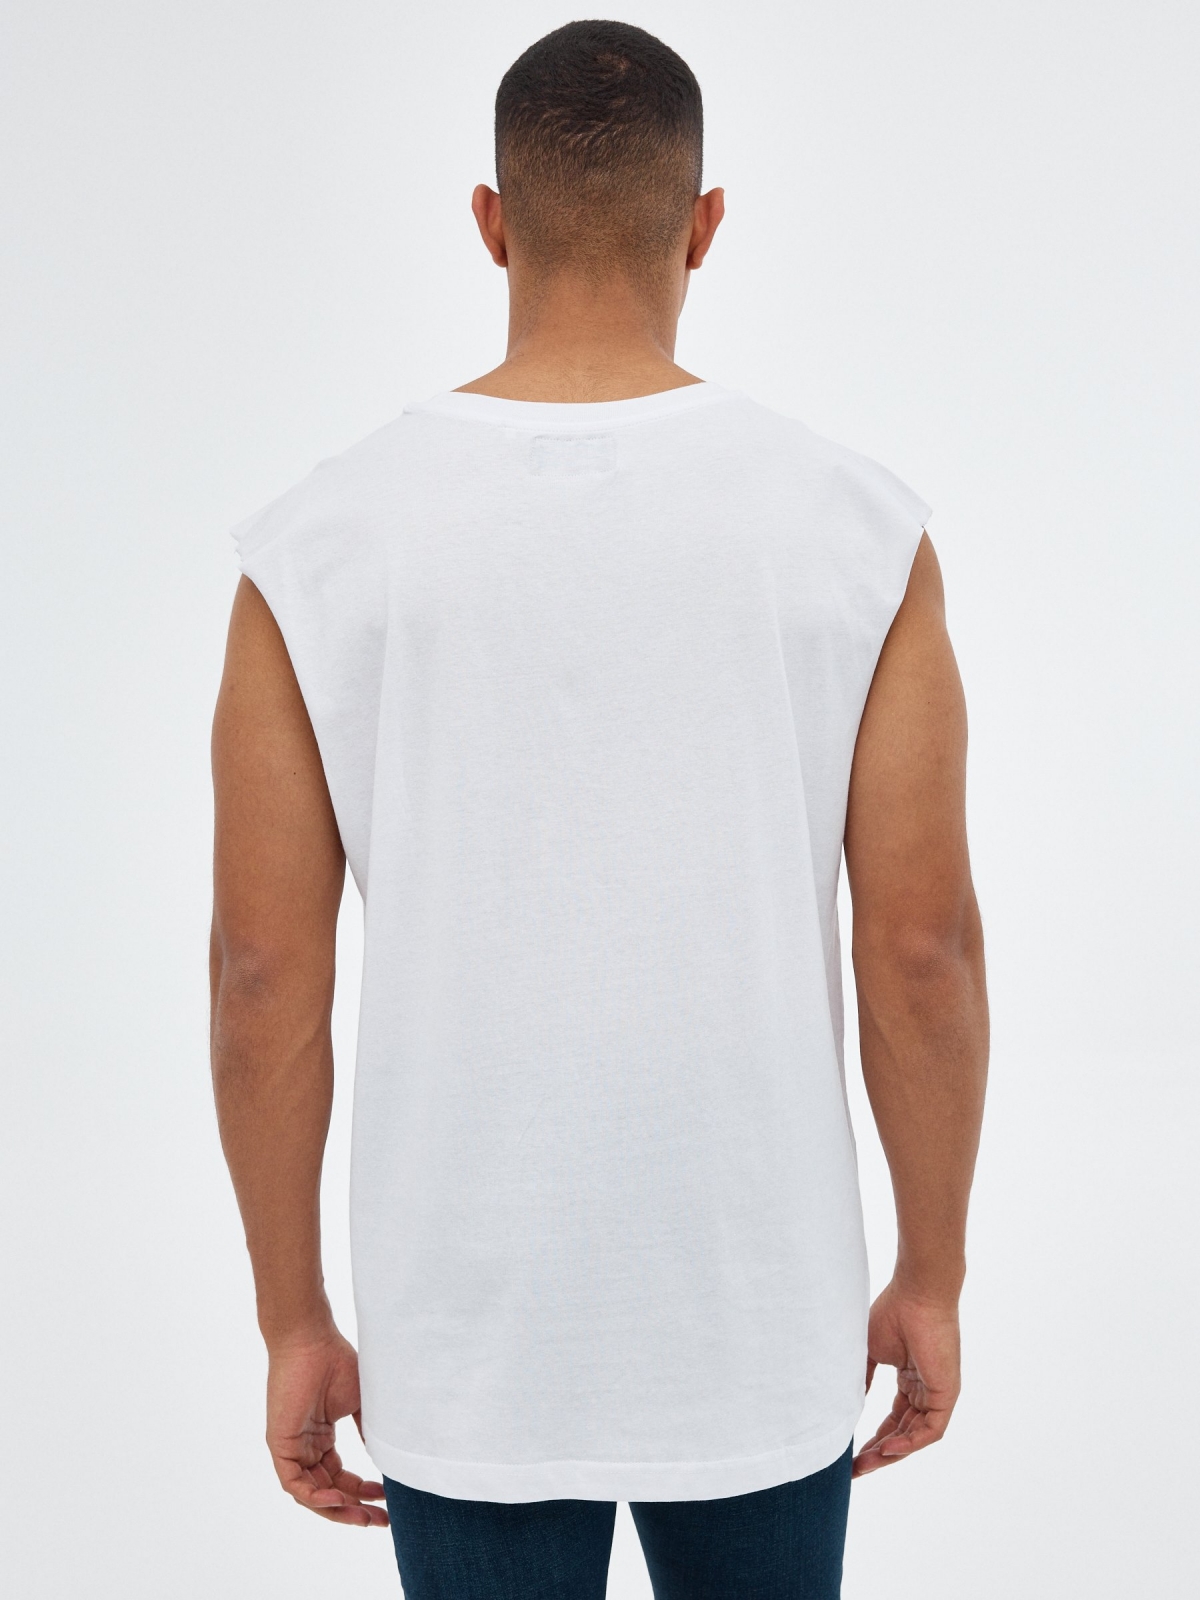 Hawaiian sleeveless t-shirt white middle back view